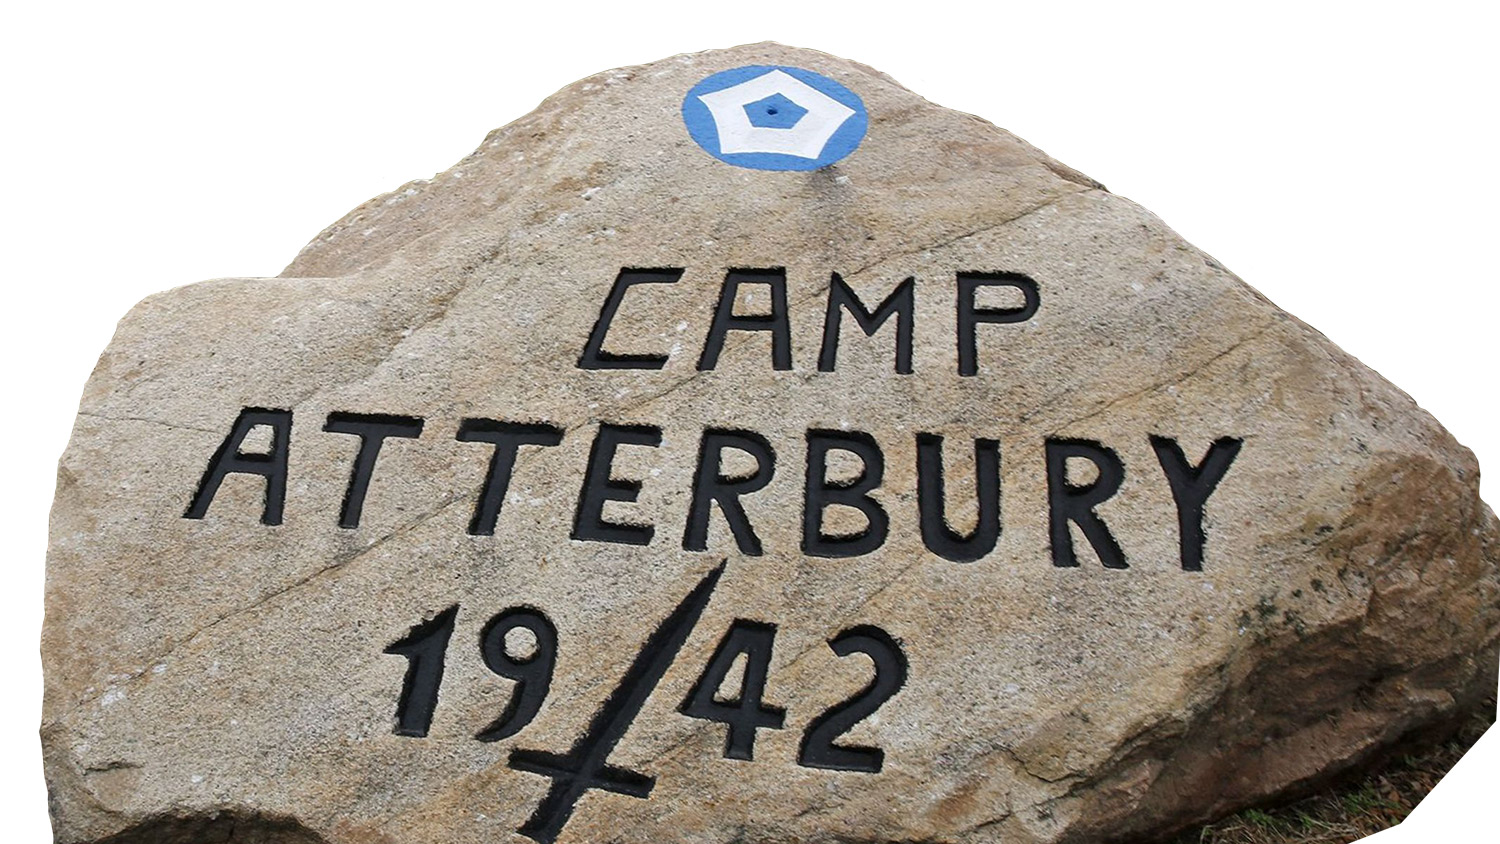 Camp Atterbury Rock